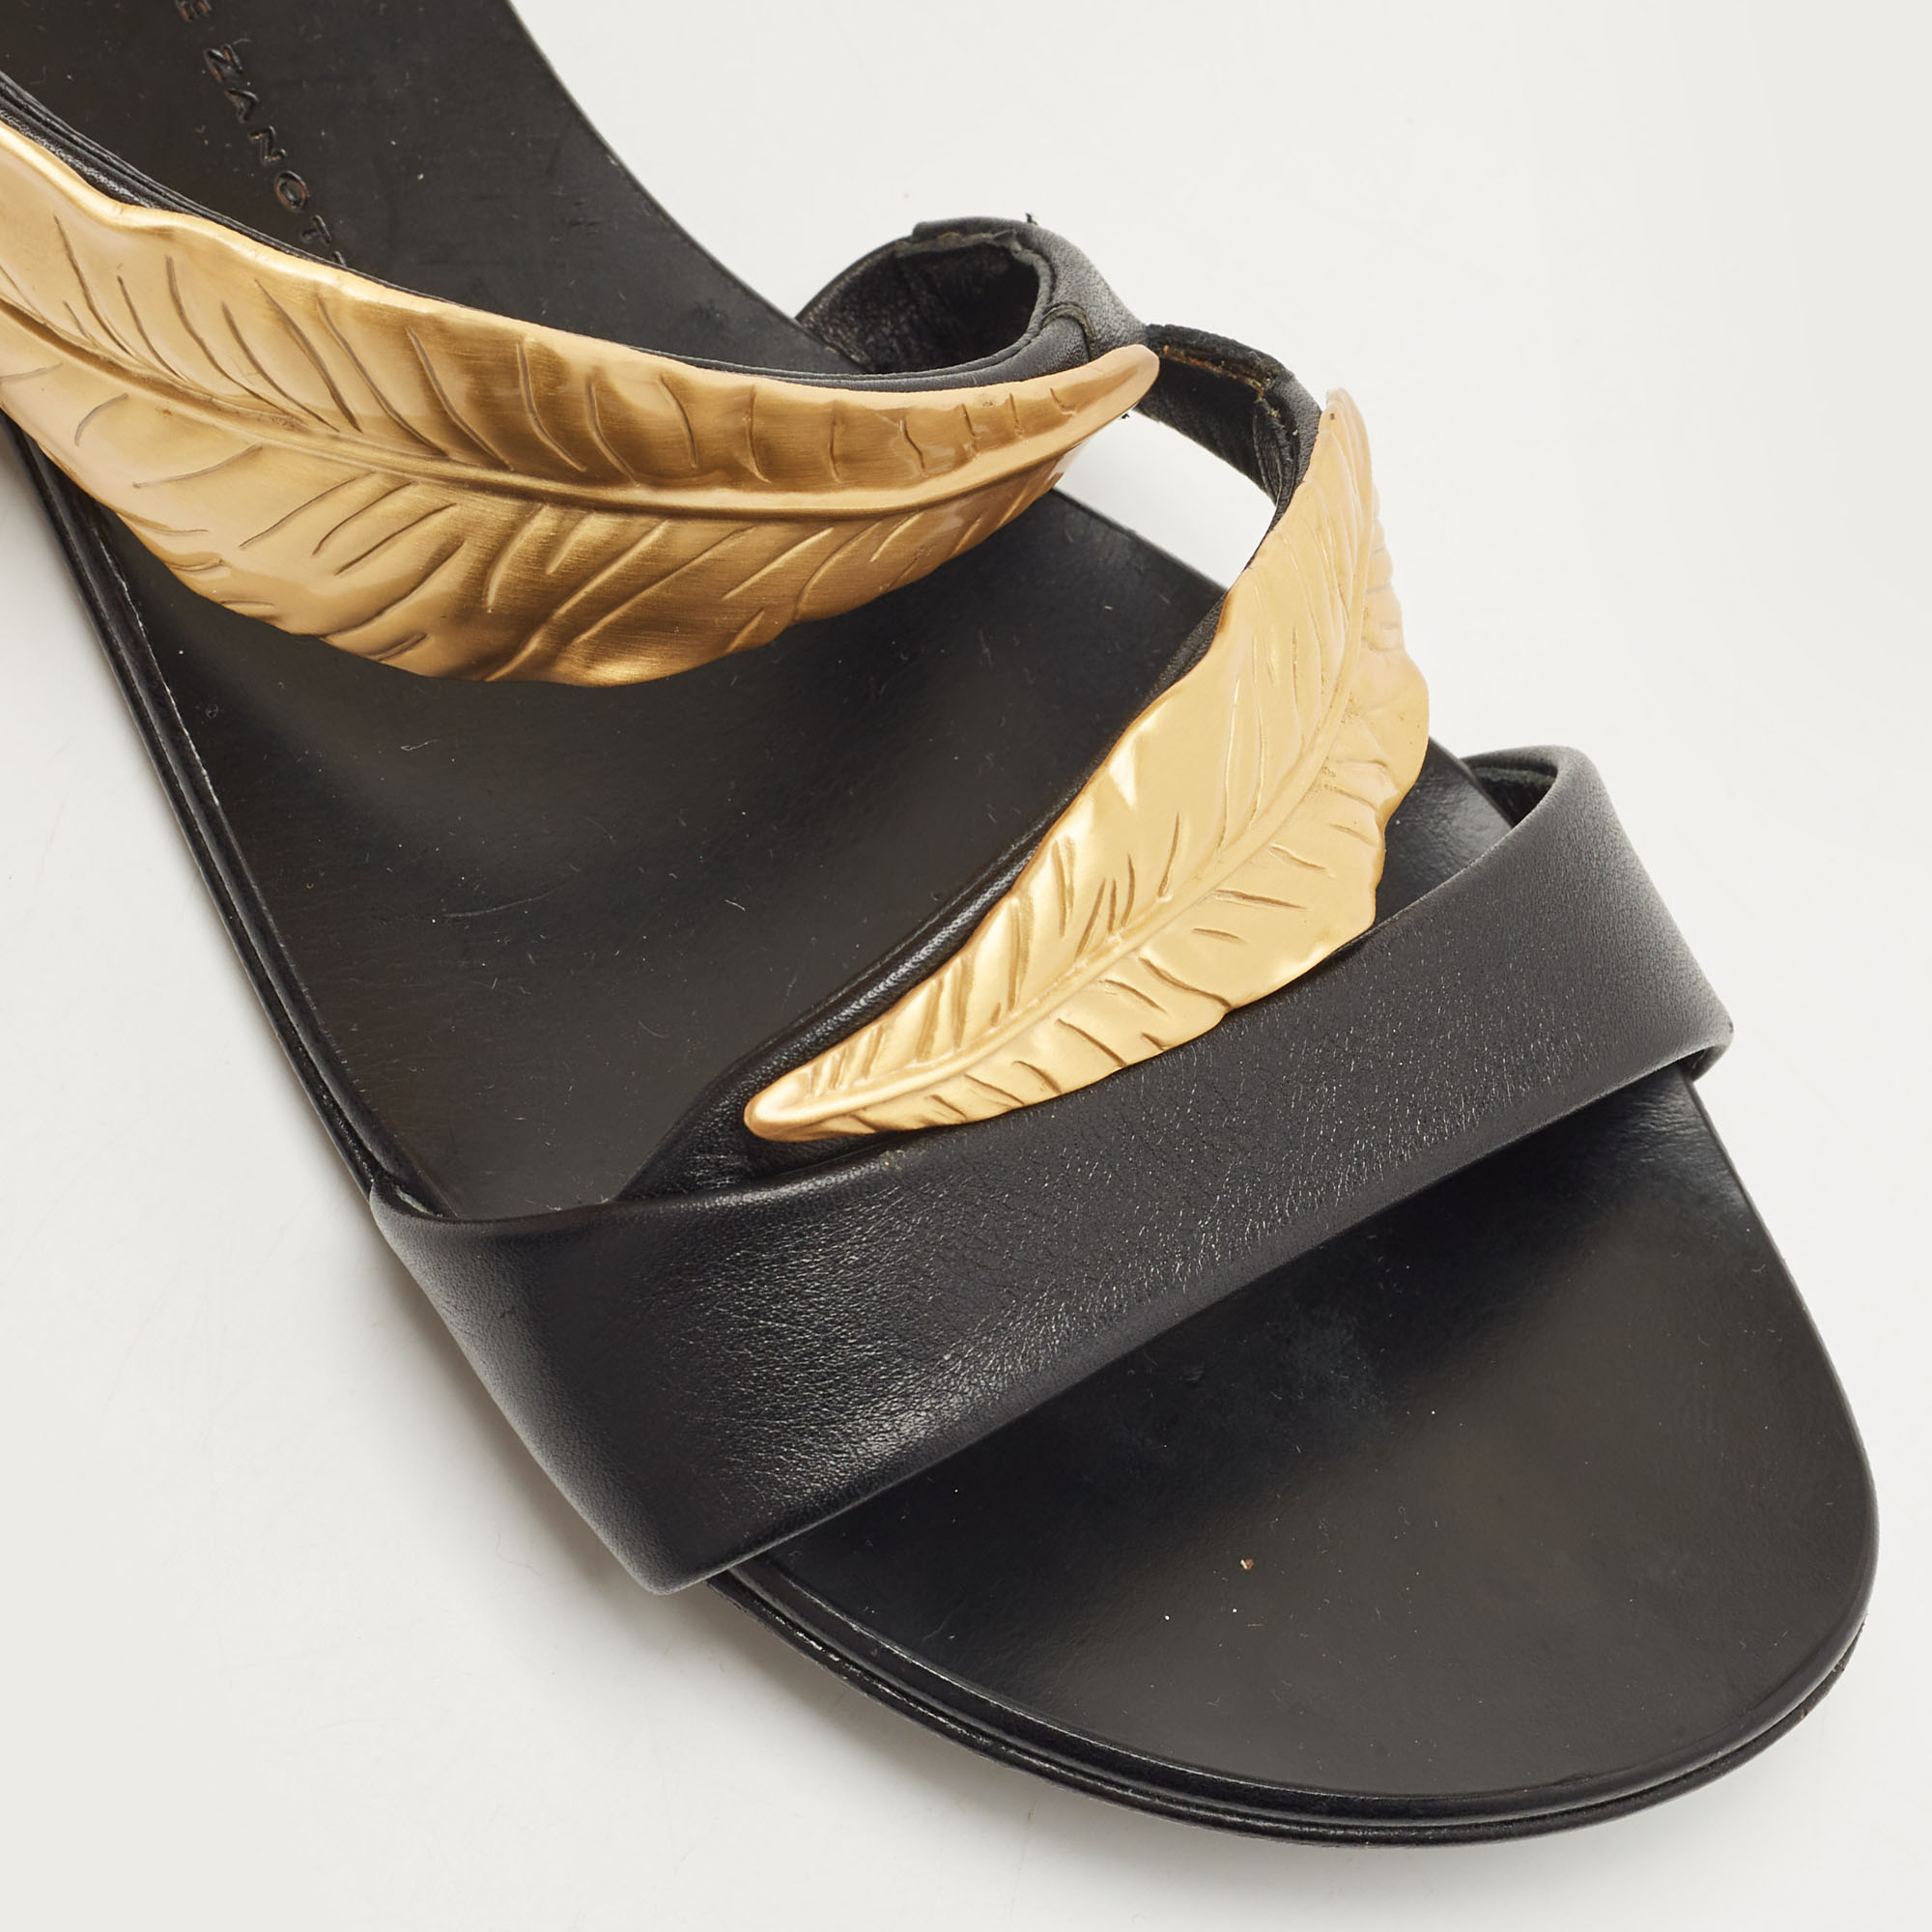 Giuseppe Zanotti Black Leather Leaf Ankle Cuff Sandals Size 41